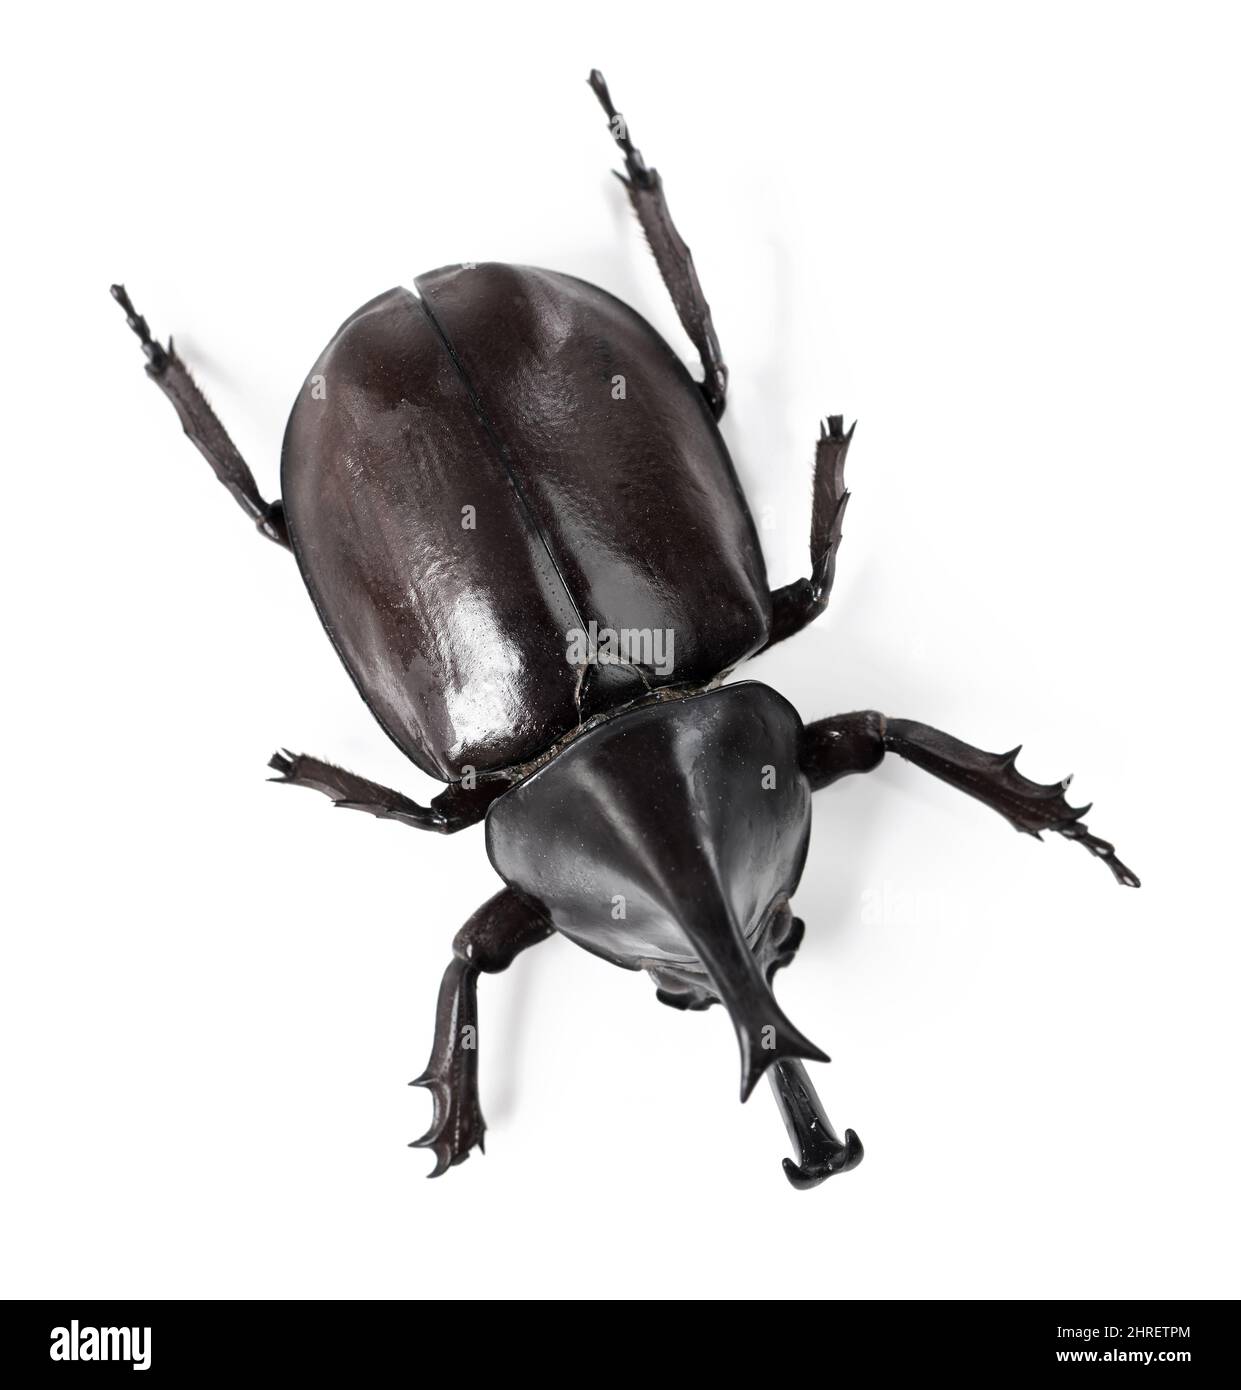 The rhino of the bug world. Closeup side view of a rhinoceros beetle. Stock Photo